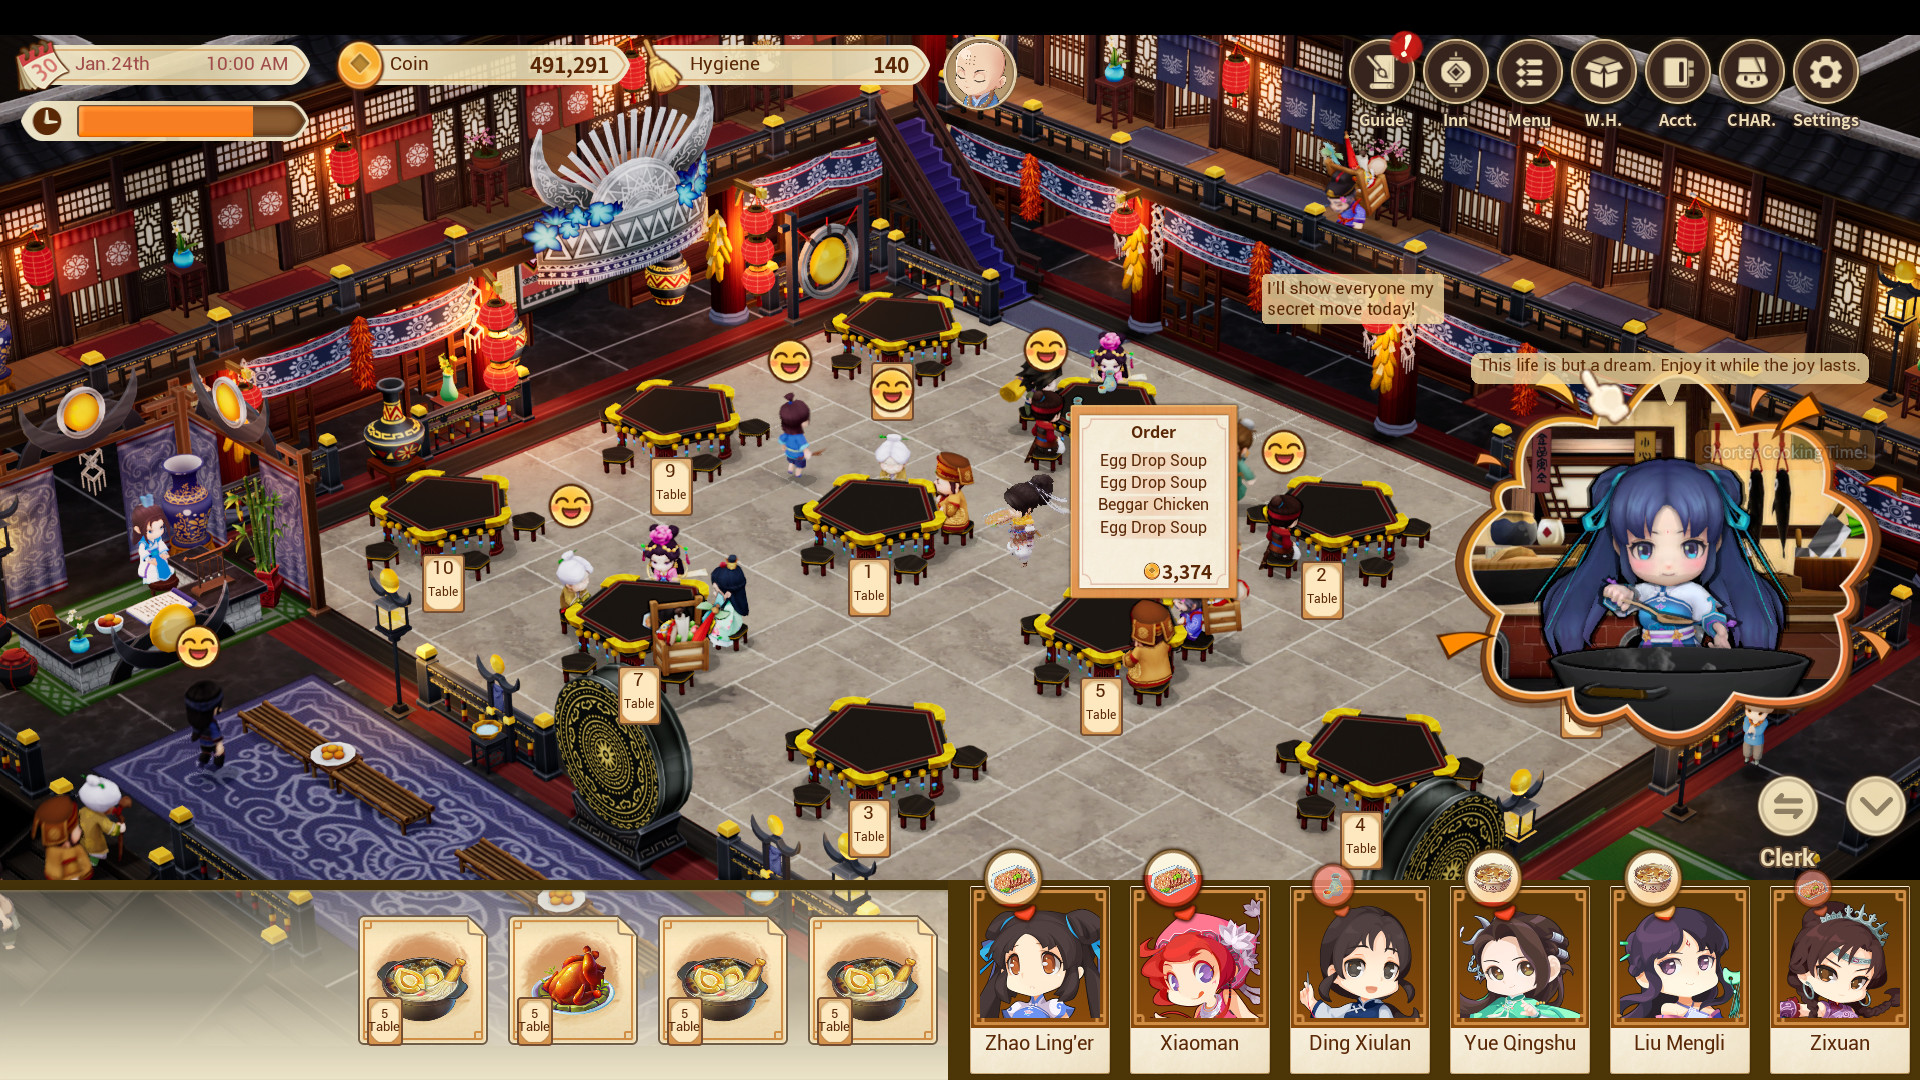 A screenshot from Sword & Fairy Inn 2, highlighting the core gameplay